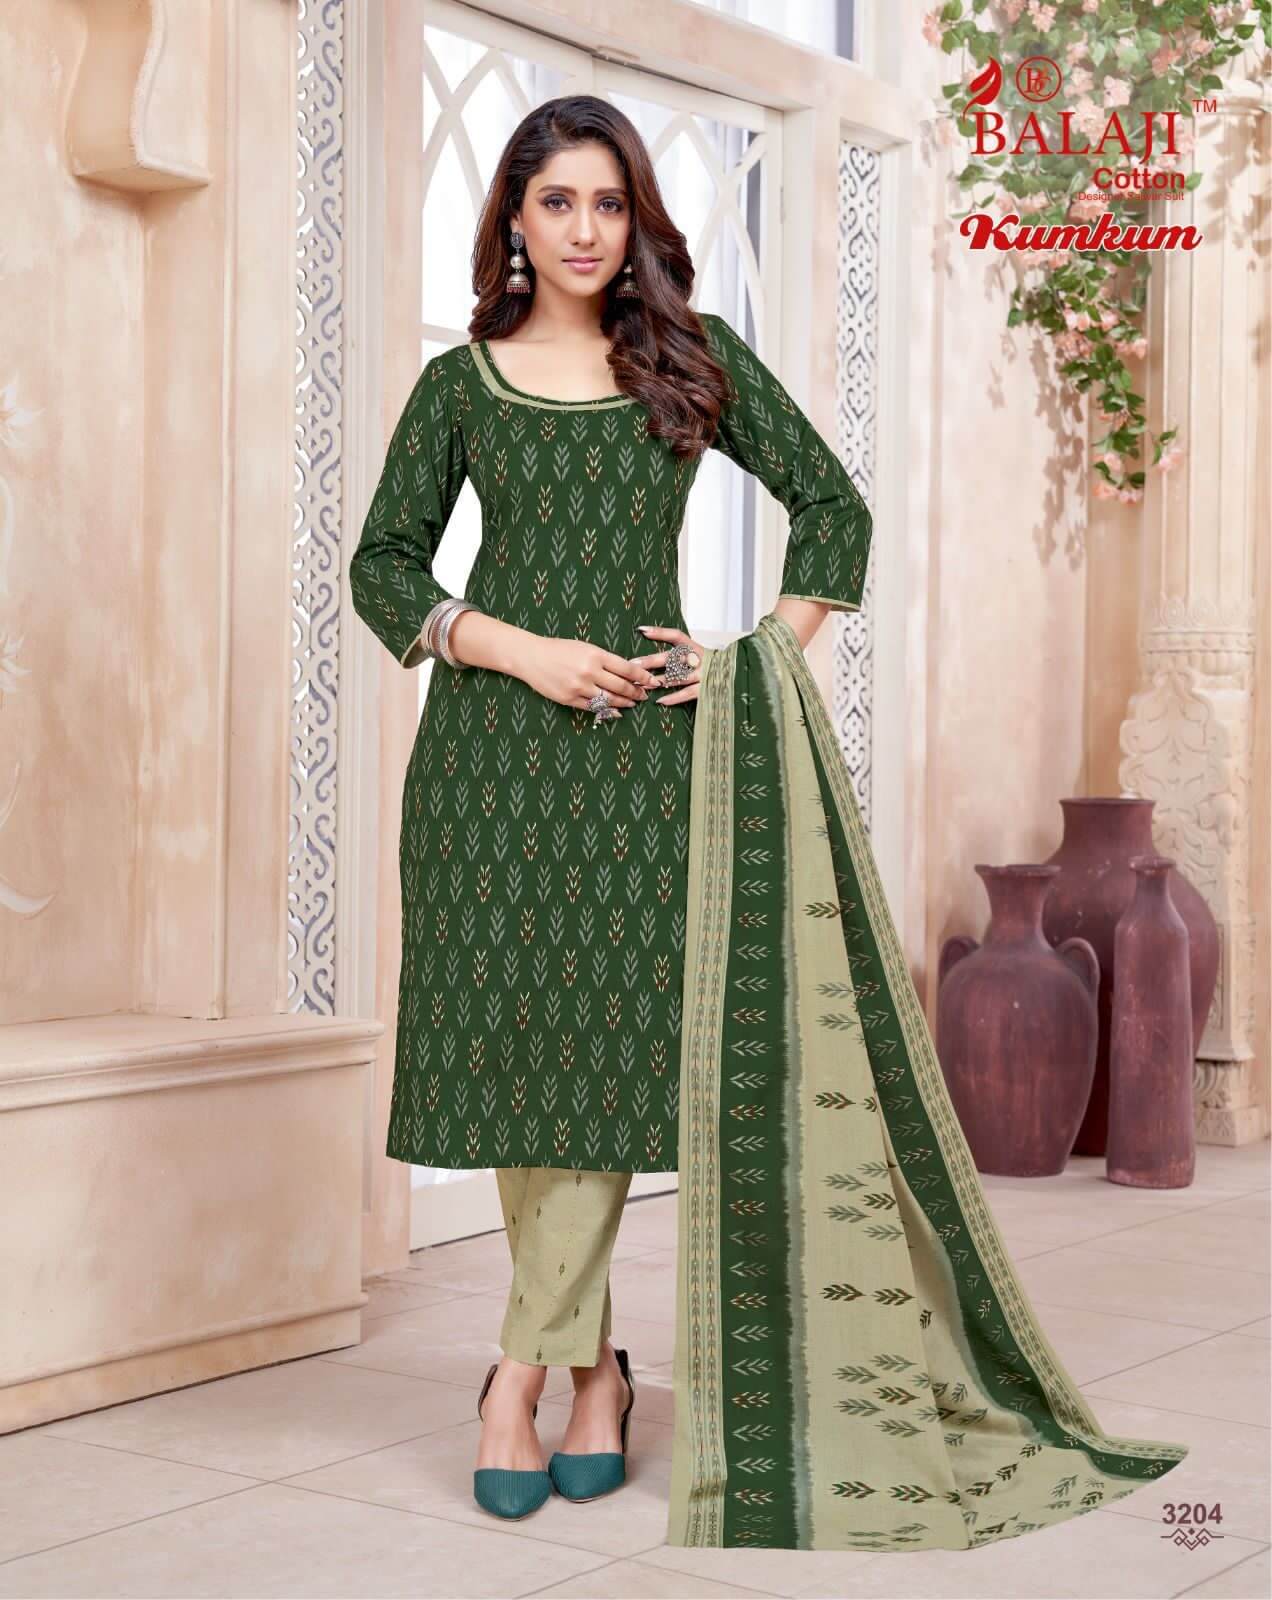 Balaji Cotton Kumkum Vol 32 Readymade Dress Catalog collection 15